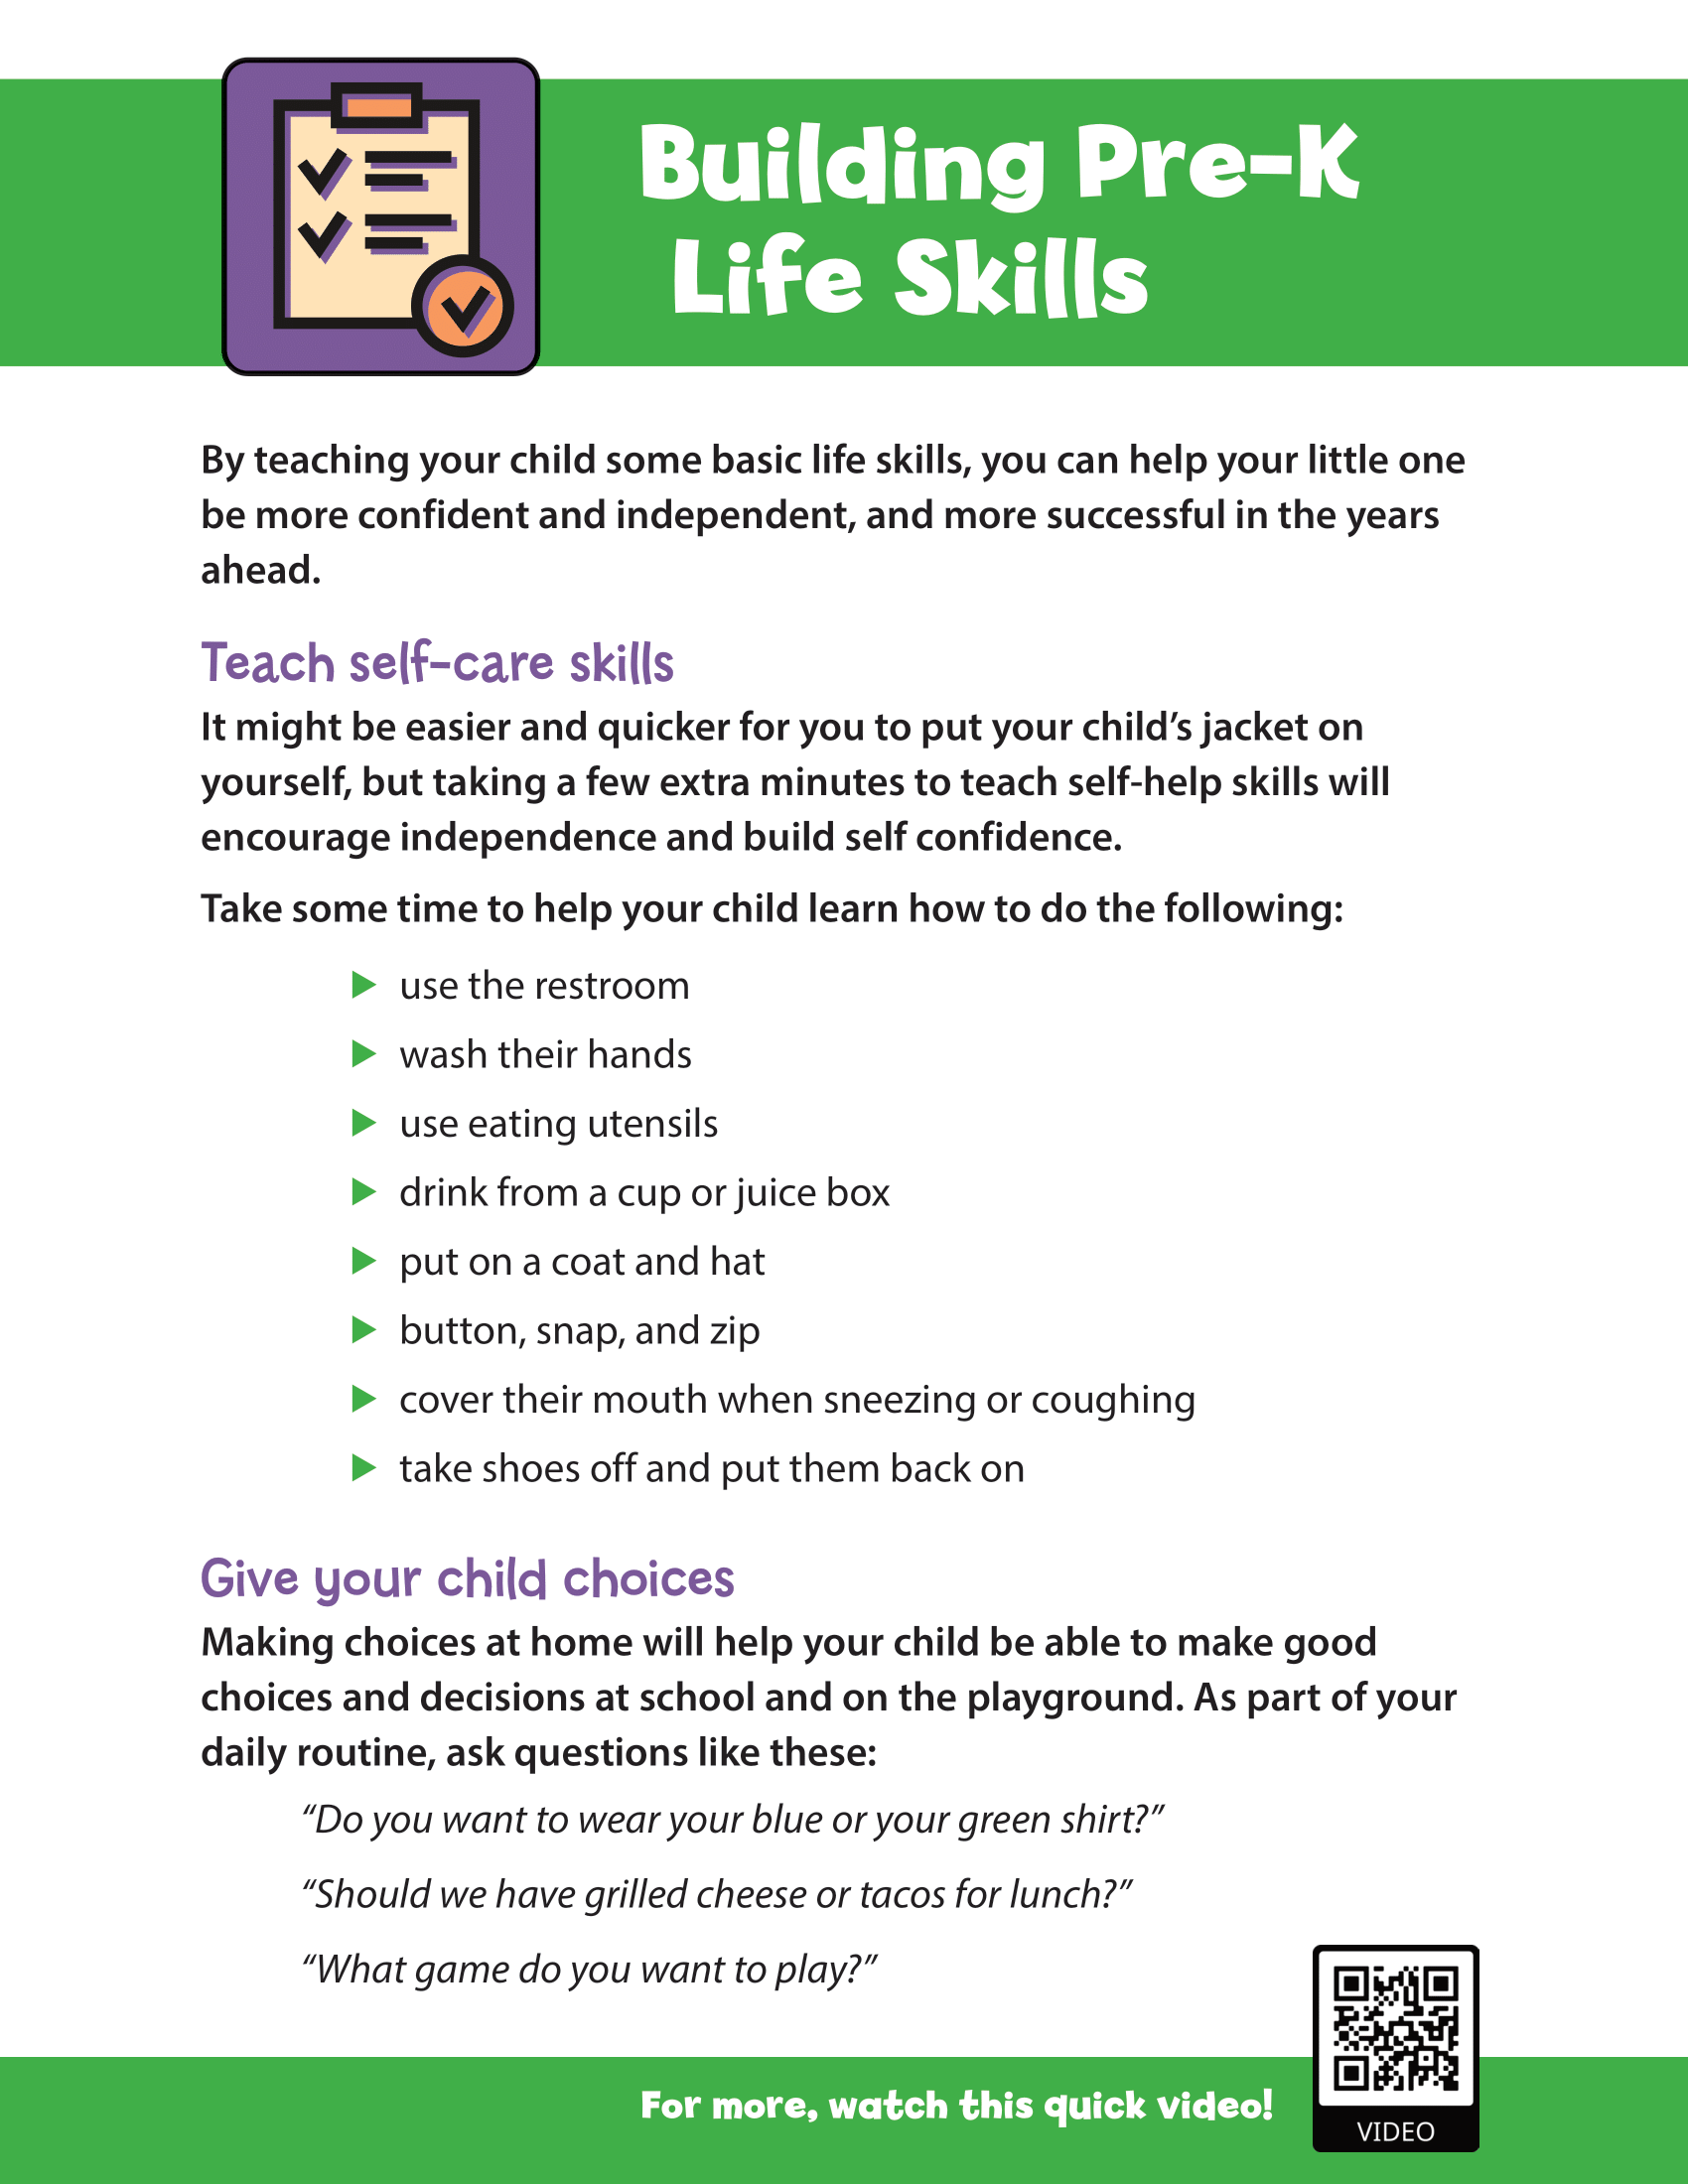 Building Pre-K Life Skills